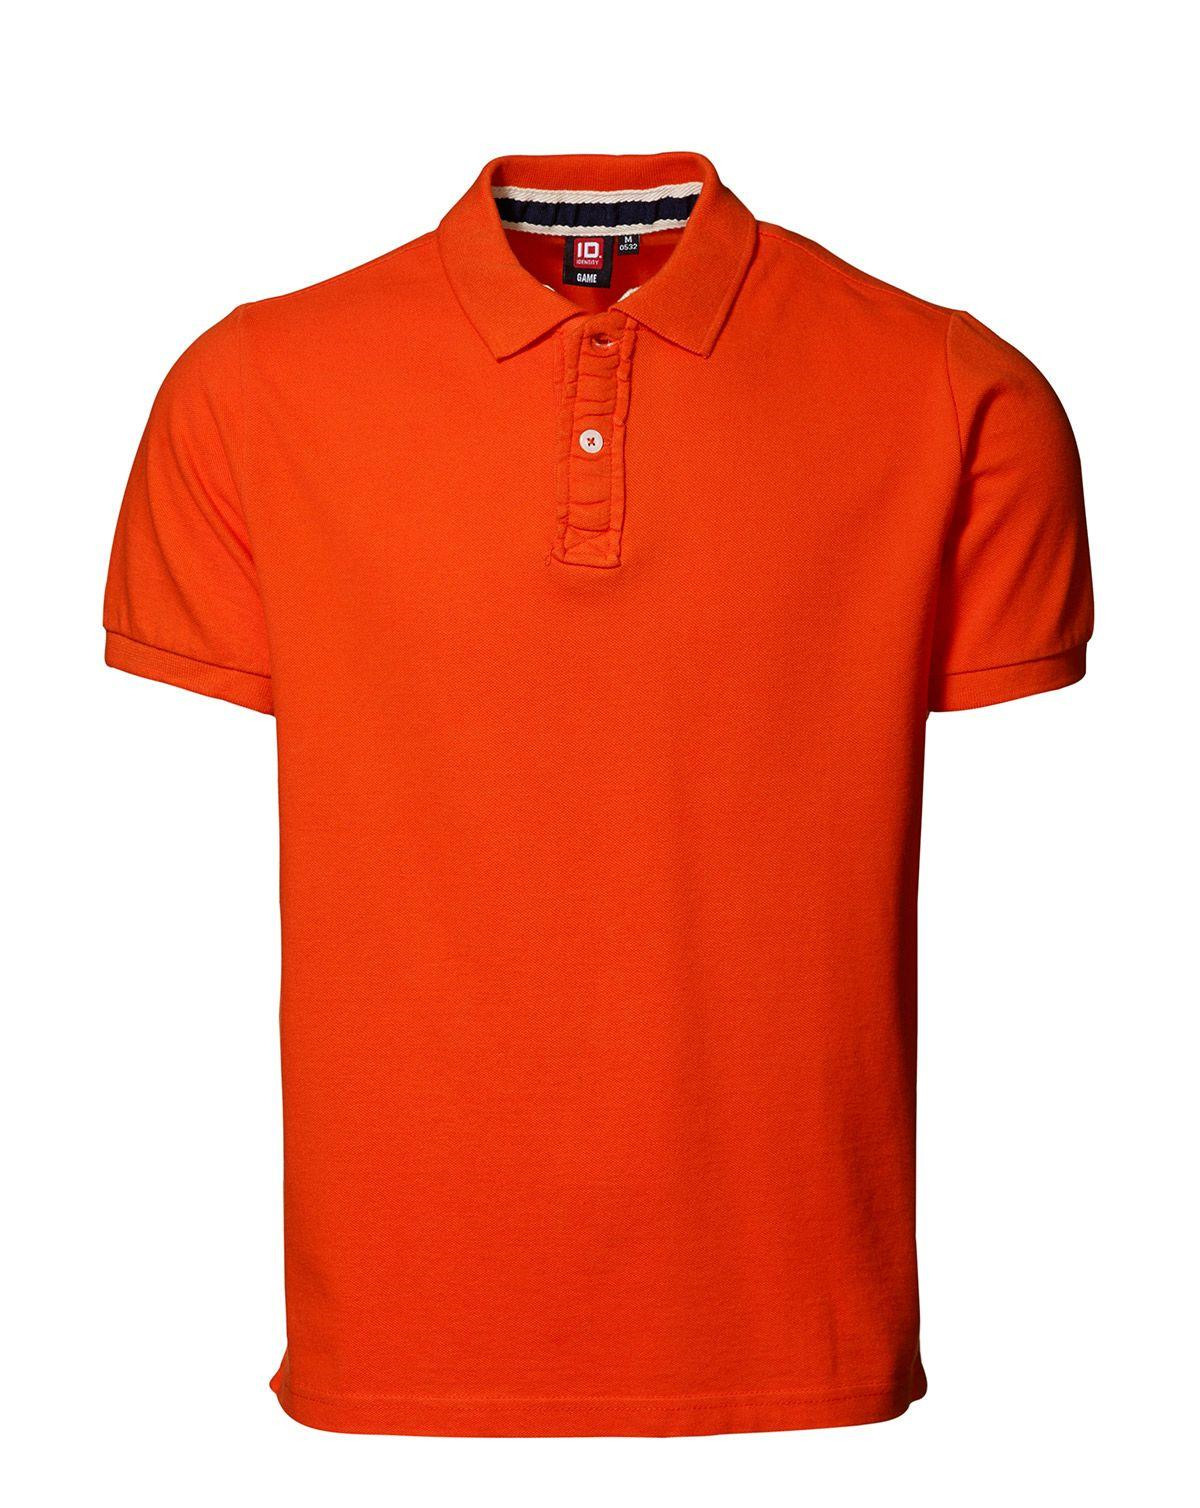 ID Vasket Piqué Polo (Orange, XL) Orange • 289.00 SEK